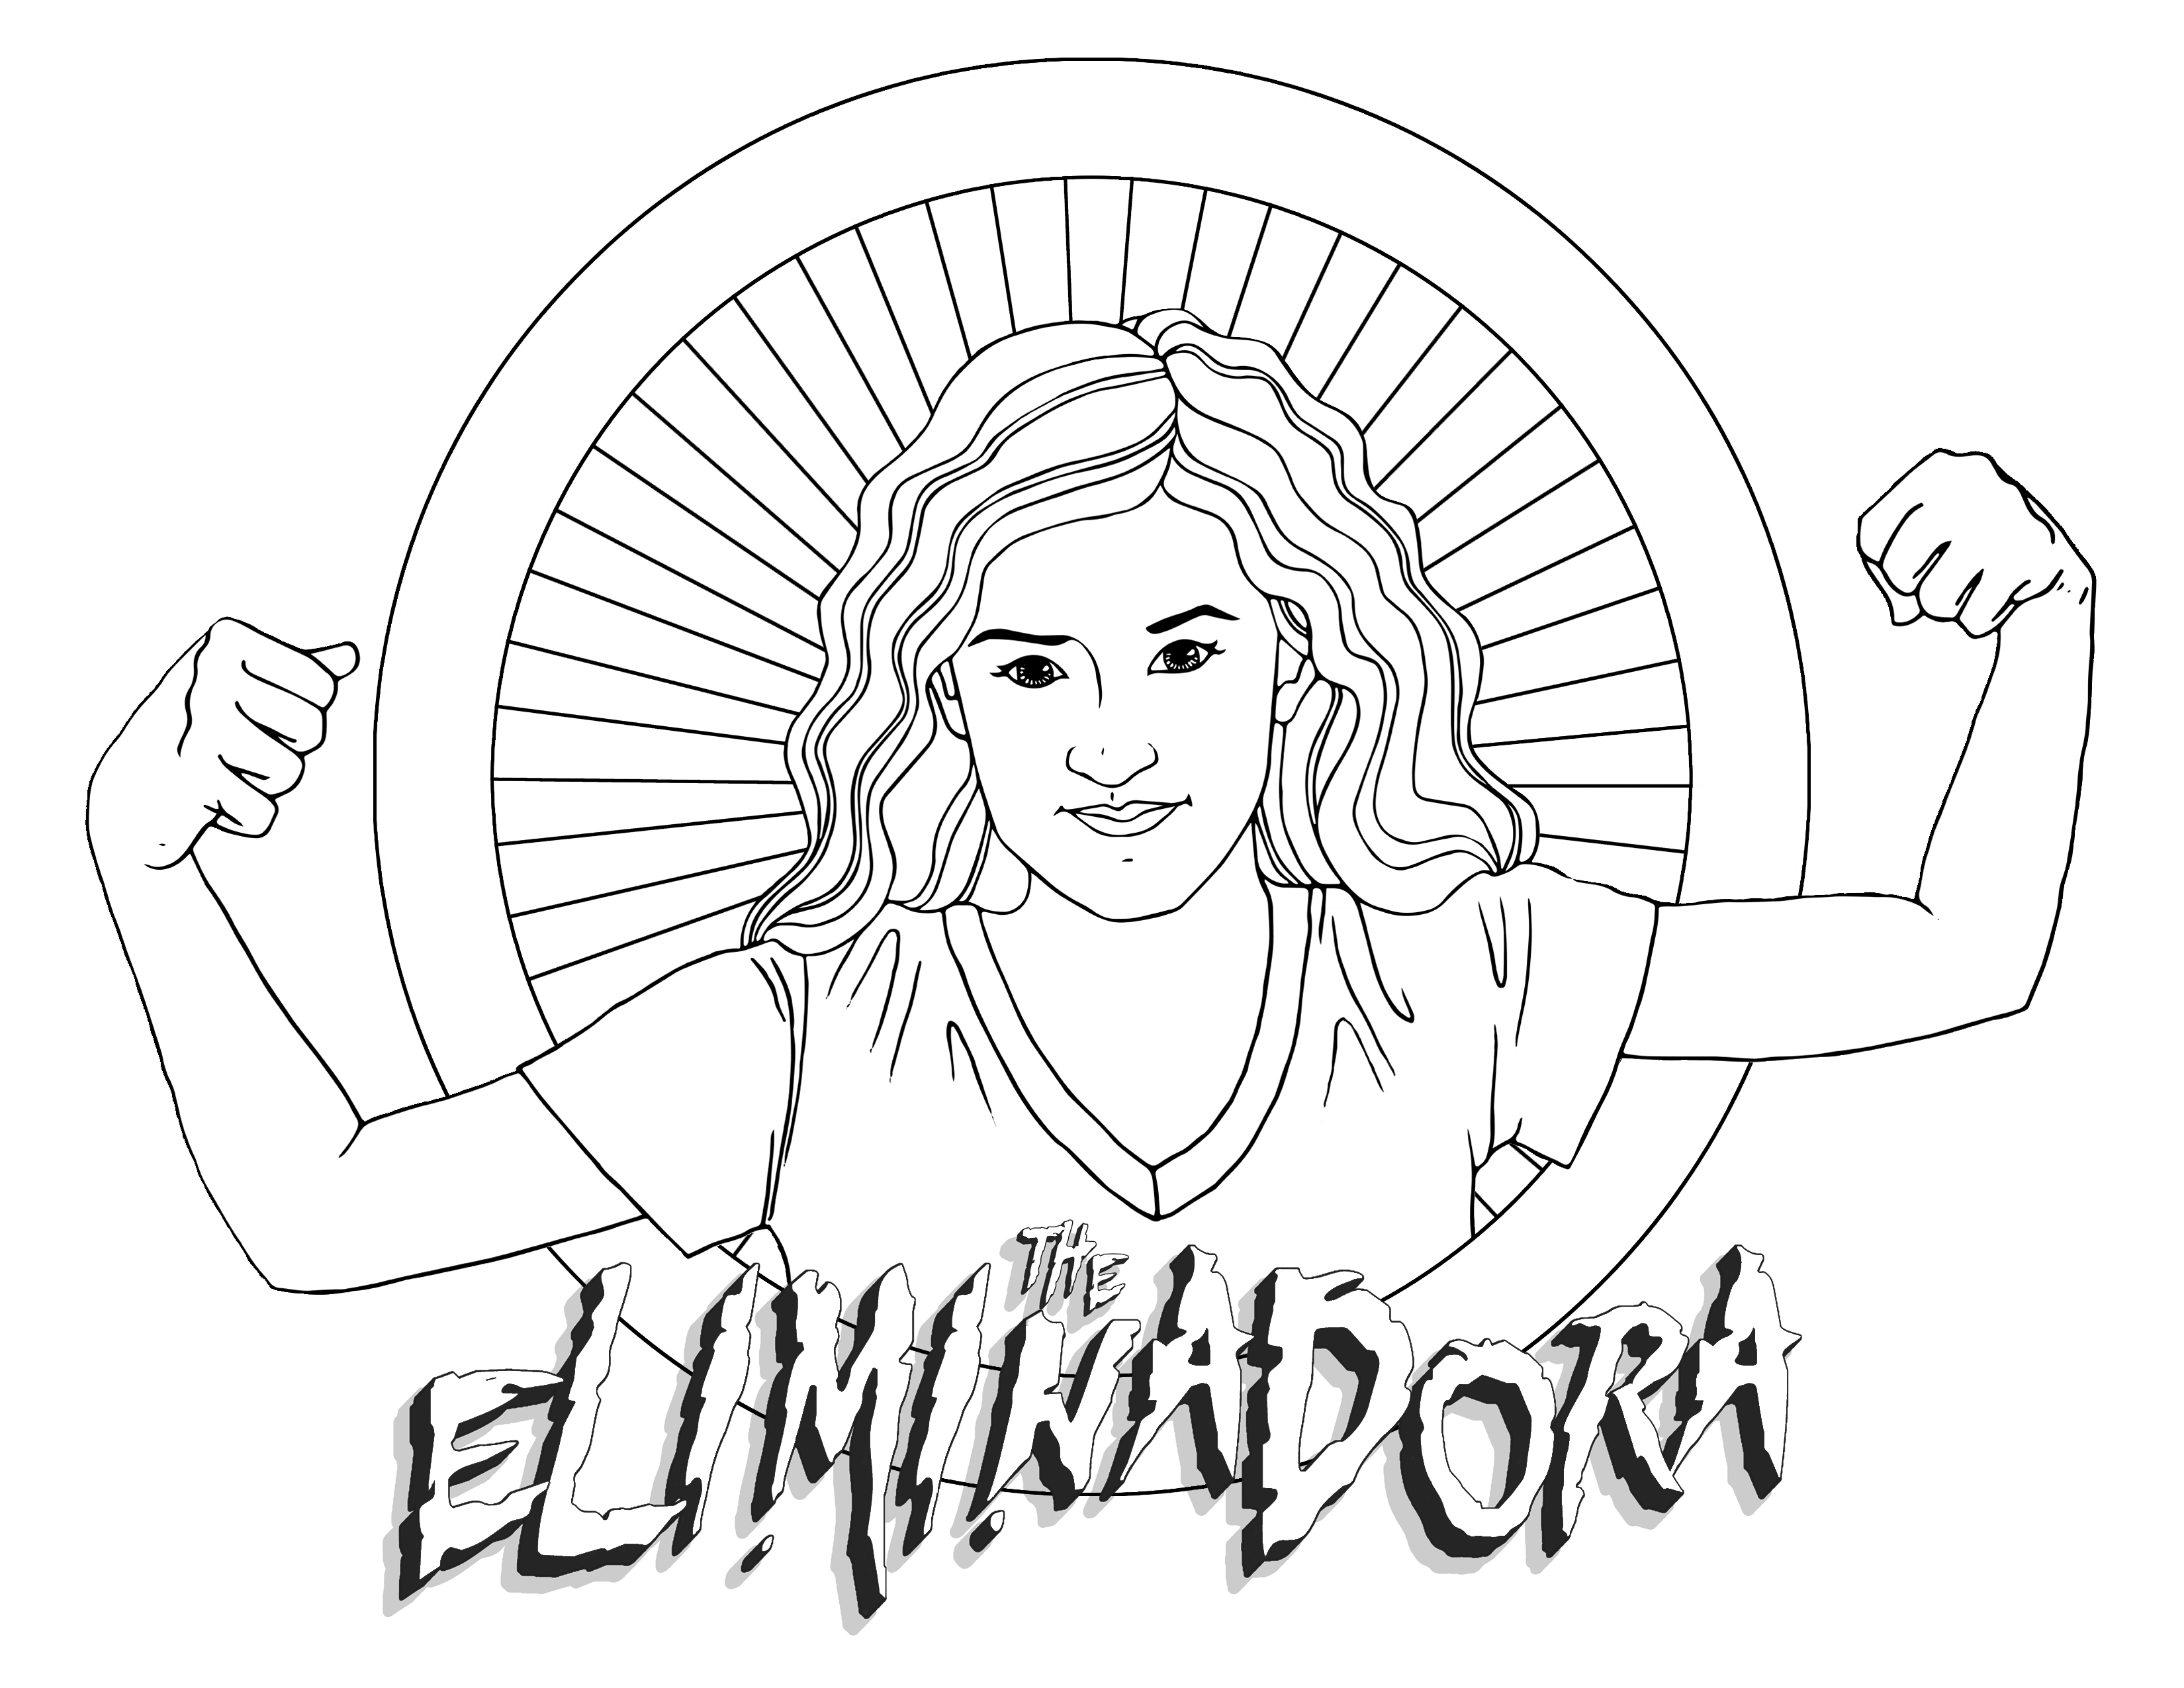 The Eliminadora